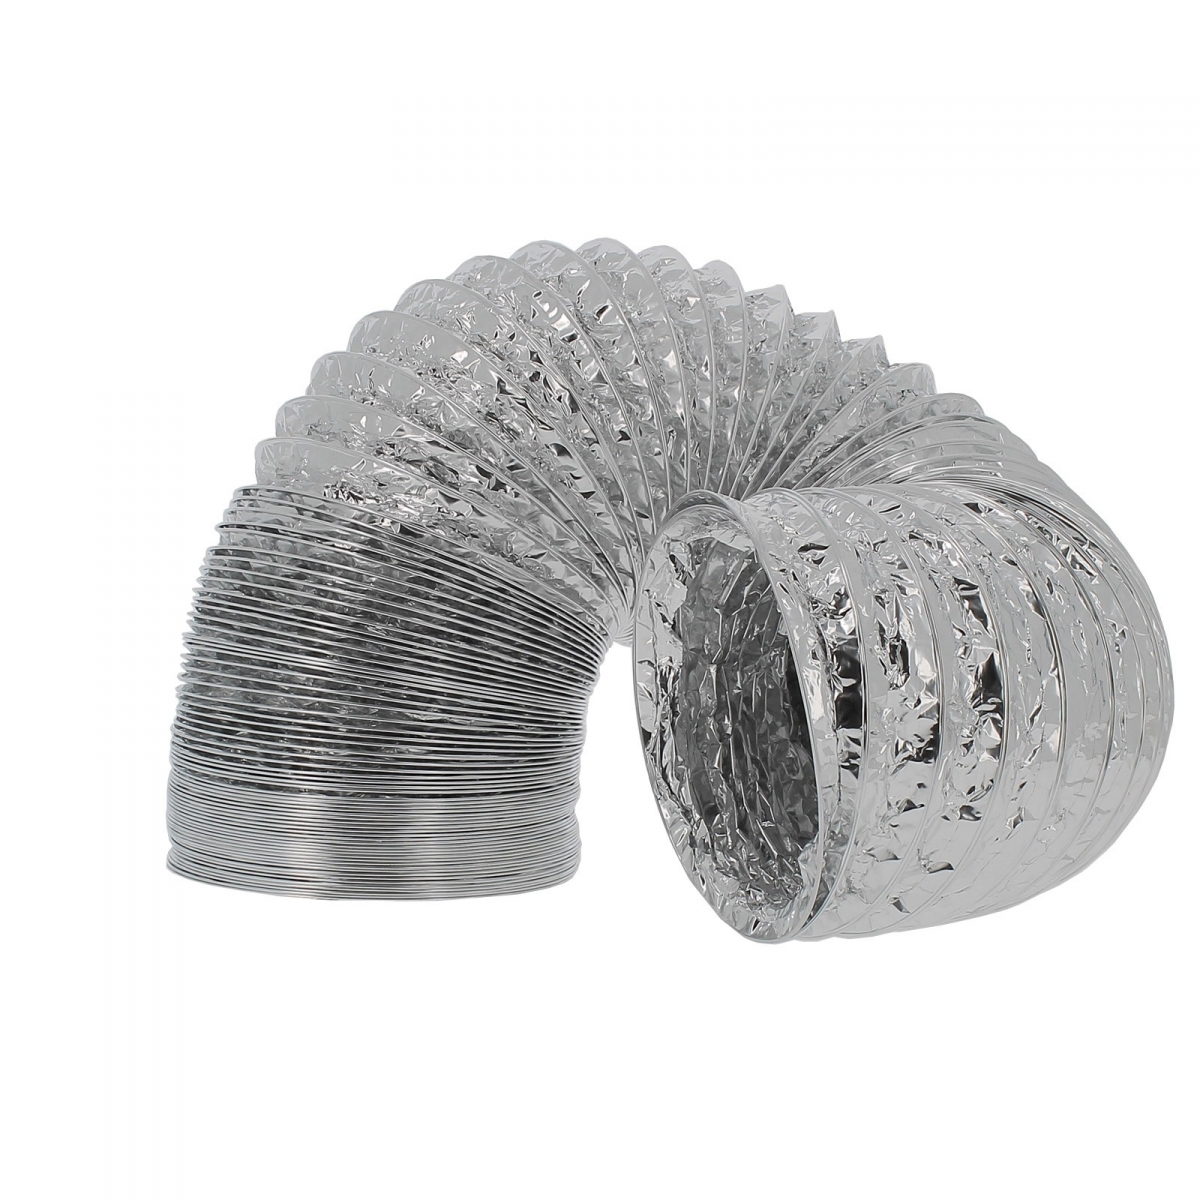 Tuyau flexible en aluminium de 2,7 m de long et 150 mm de diamètre